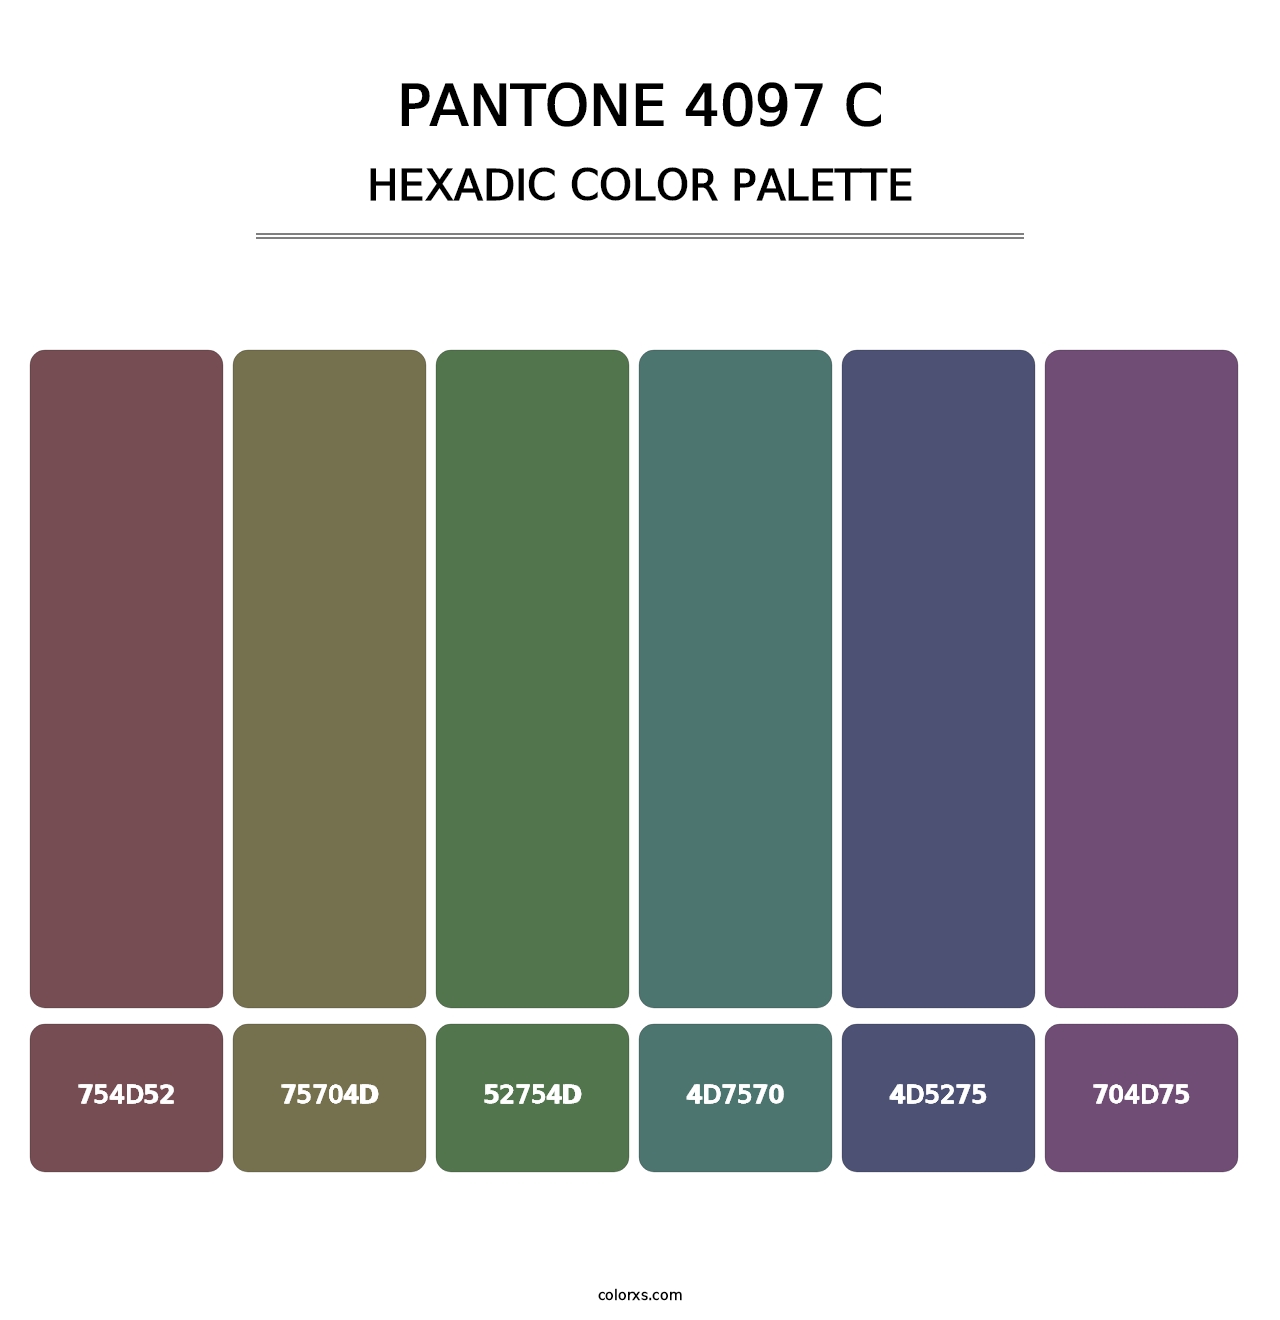 PANTONE 4097 C - Hexadic Color Palette